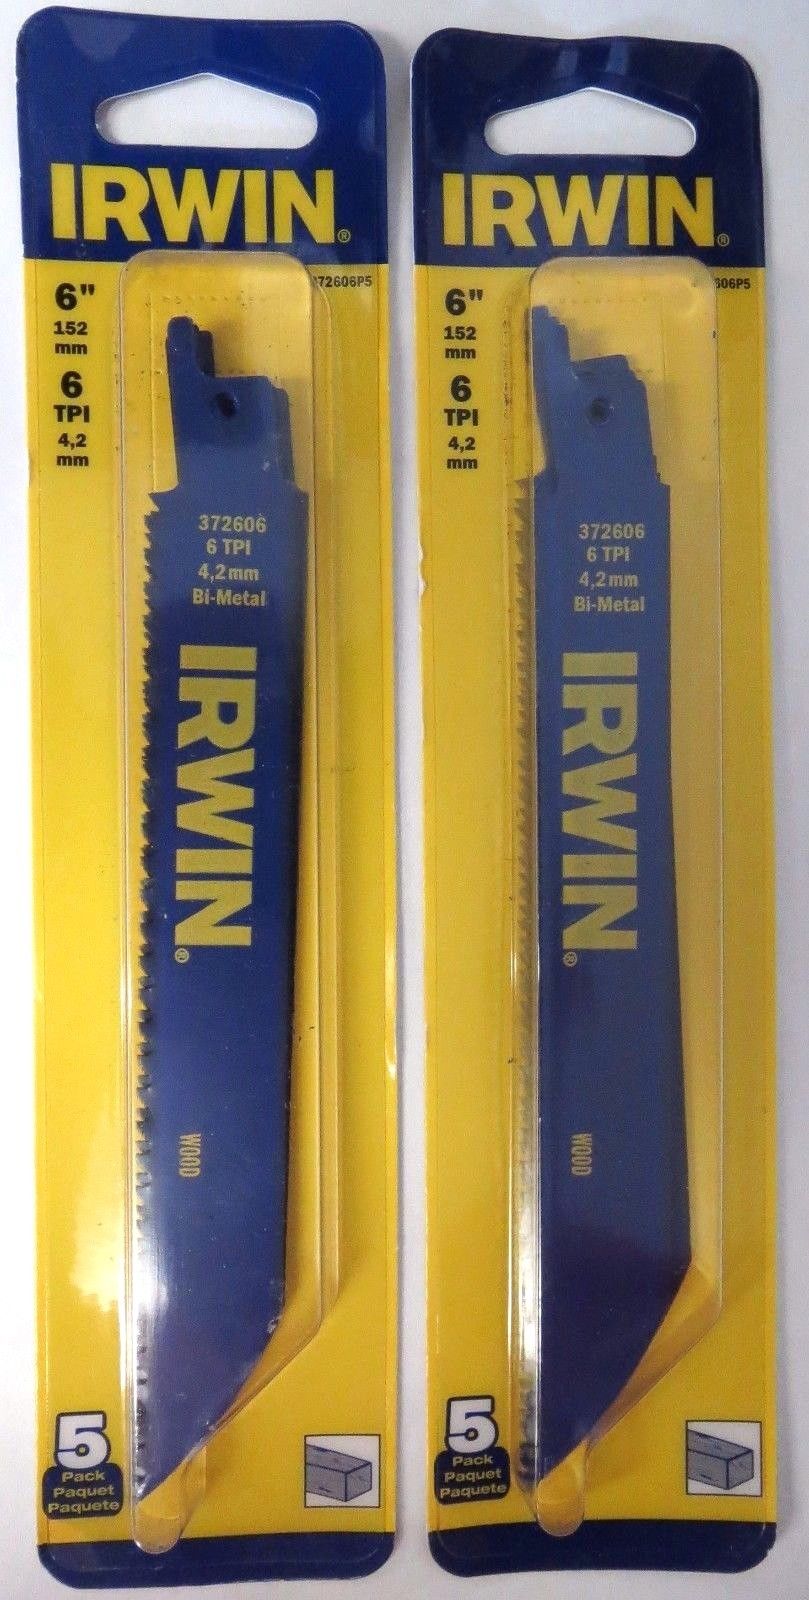 Irwin 372606P5 6" x 6TPI Bi-Metal Reciprocating Saw Blade USA 2-5 Pks